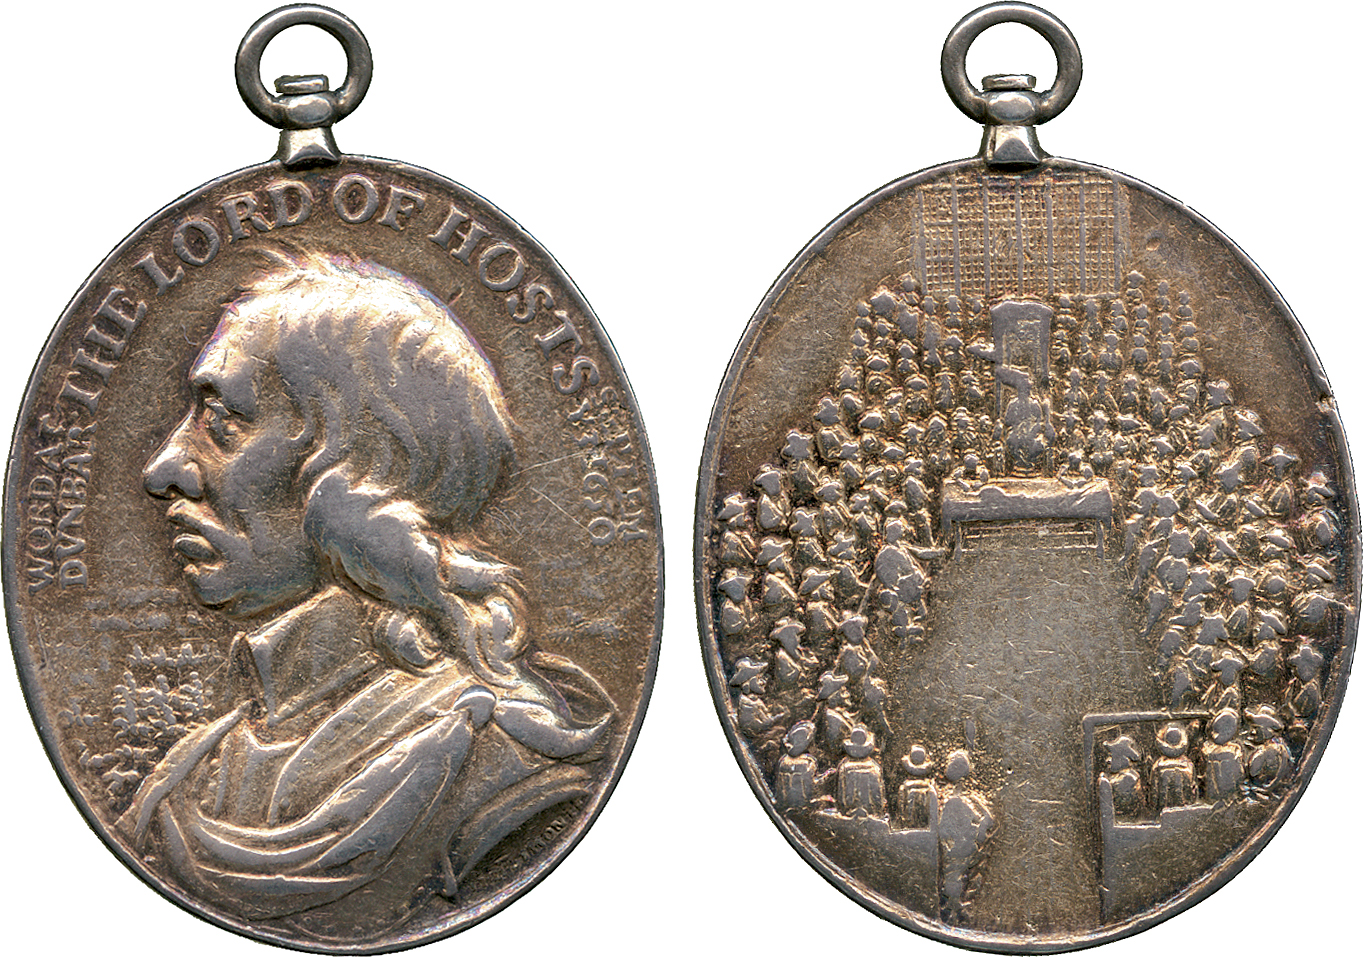 COMMEMORATIVE MEDALS, BRITISH MEDALS, Commonwealth, Battle of Dunbar 1650, cast Silver-gilt Medal,